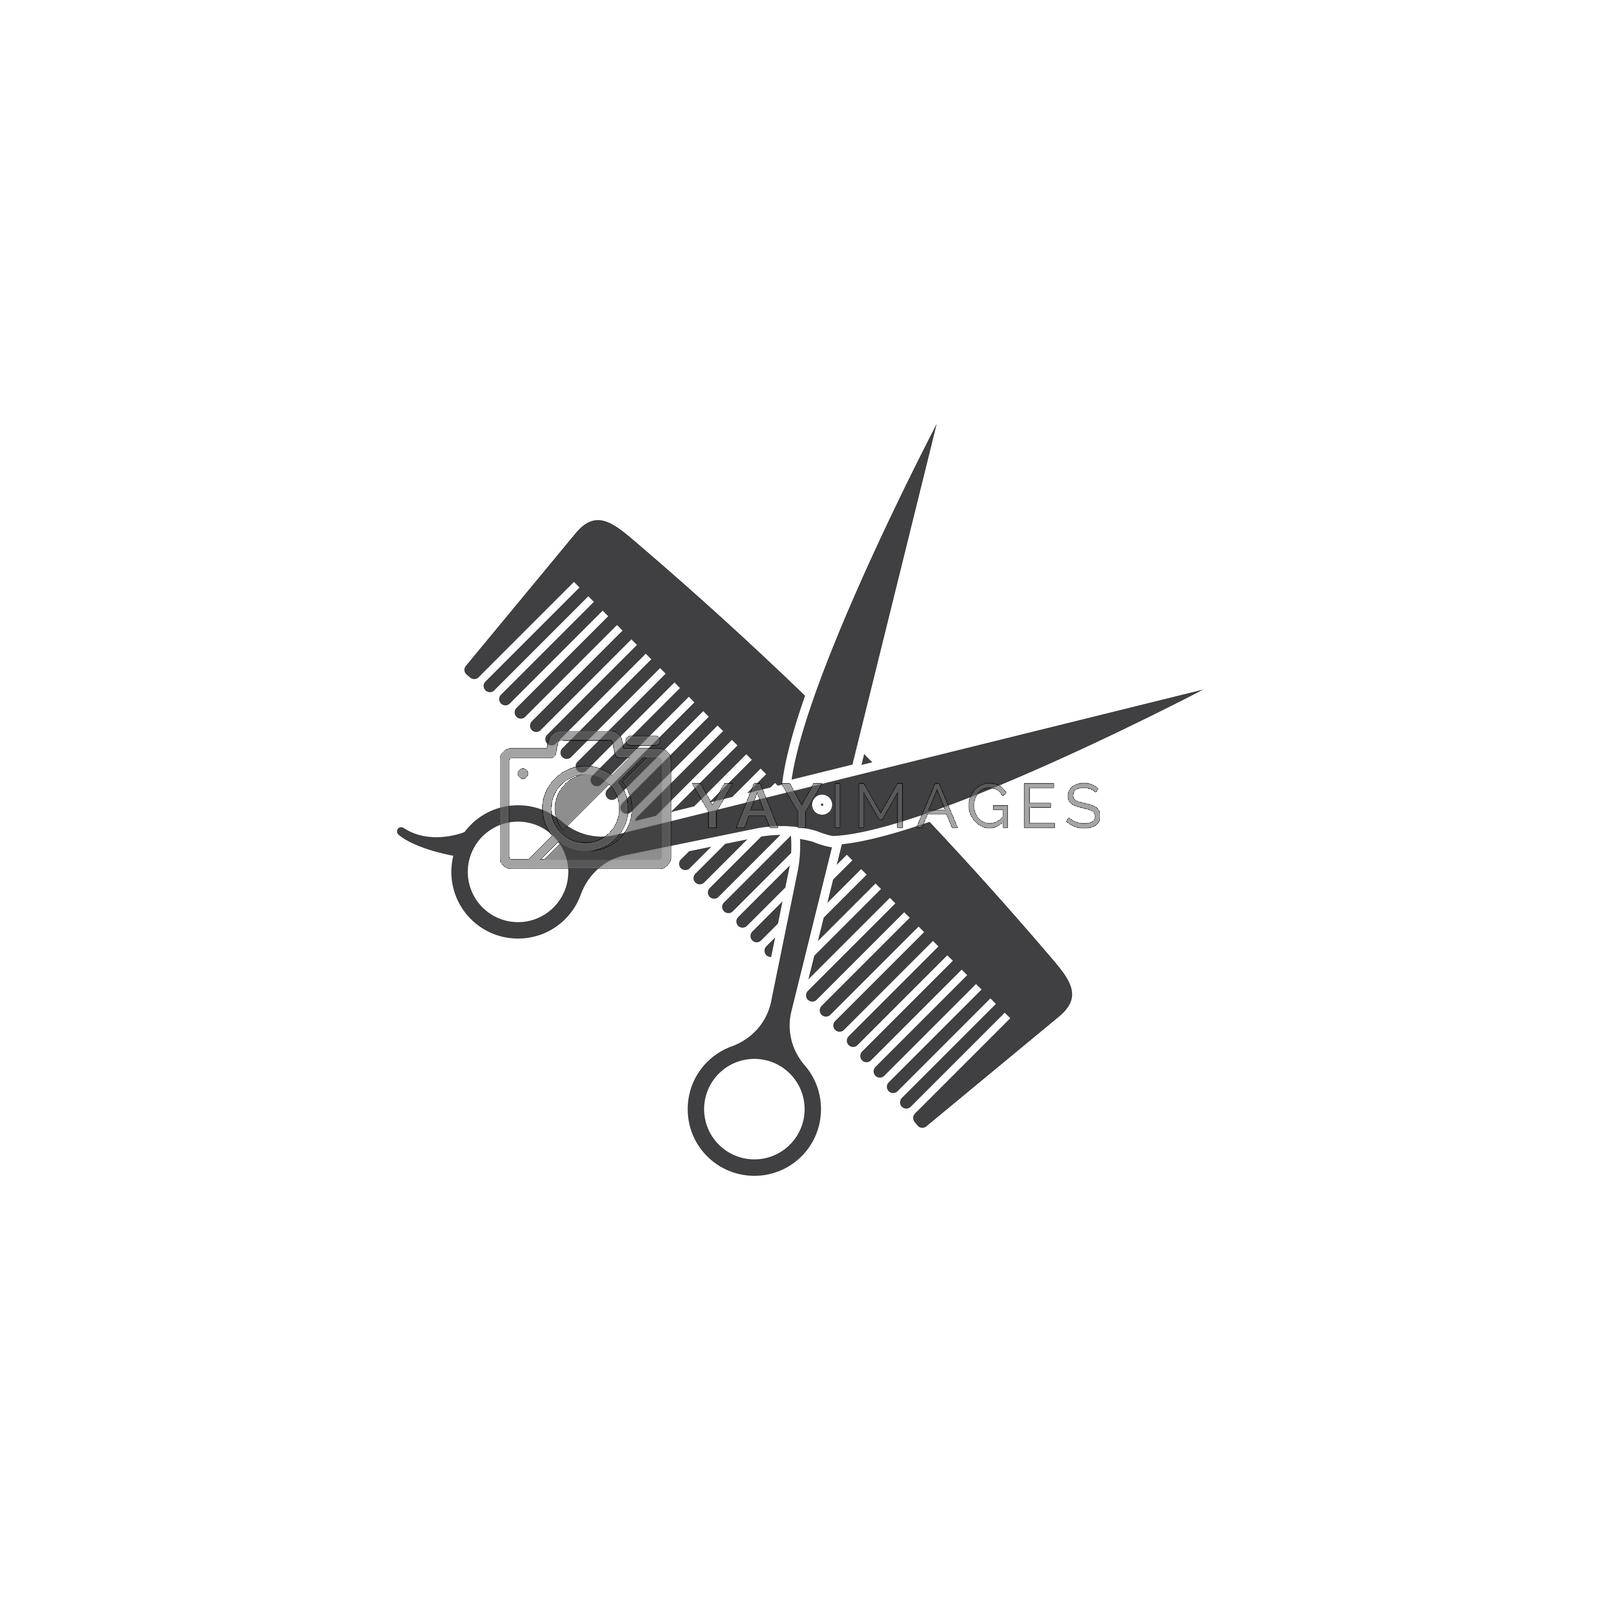 Royalty free image of vintage barber shop logo by awk